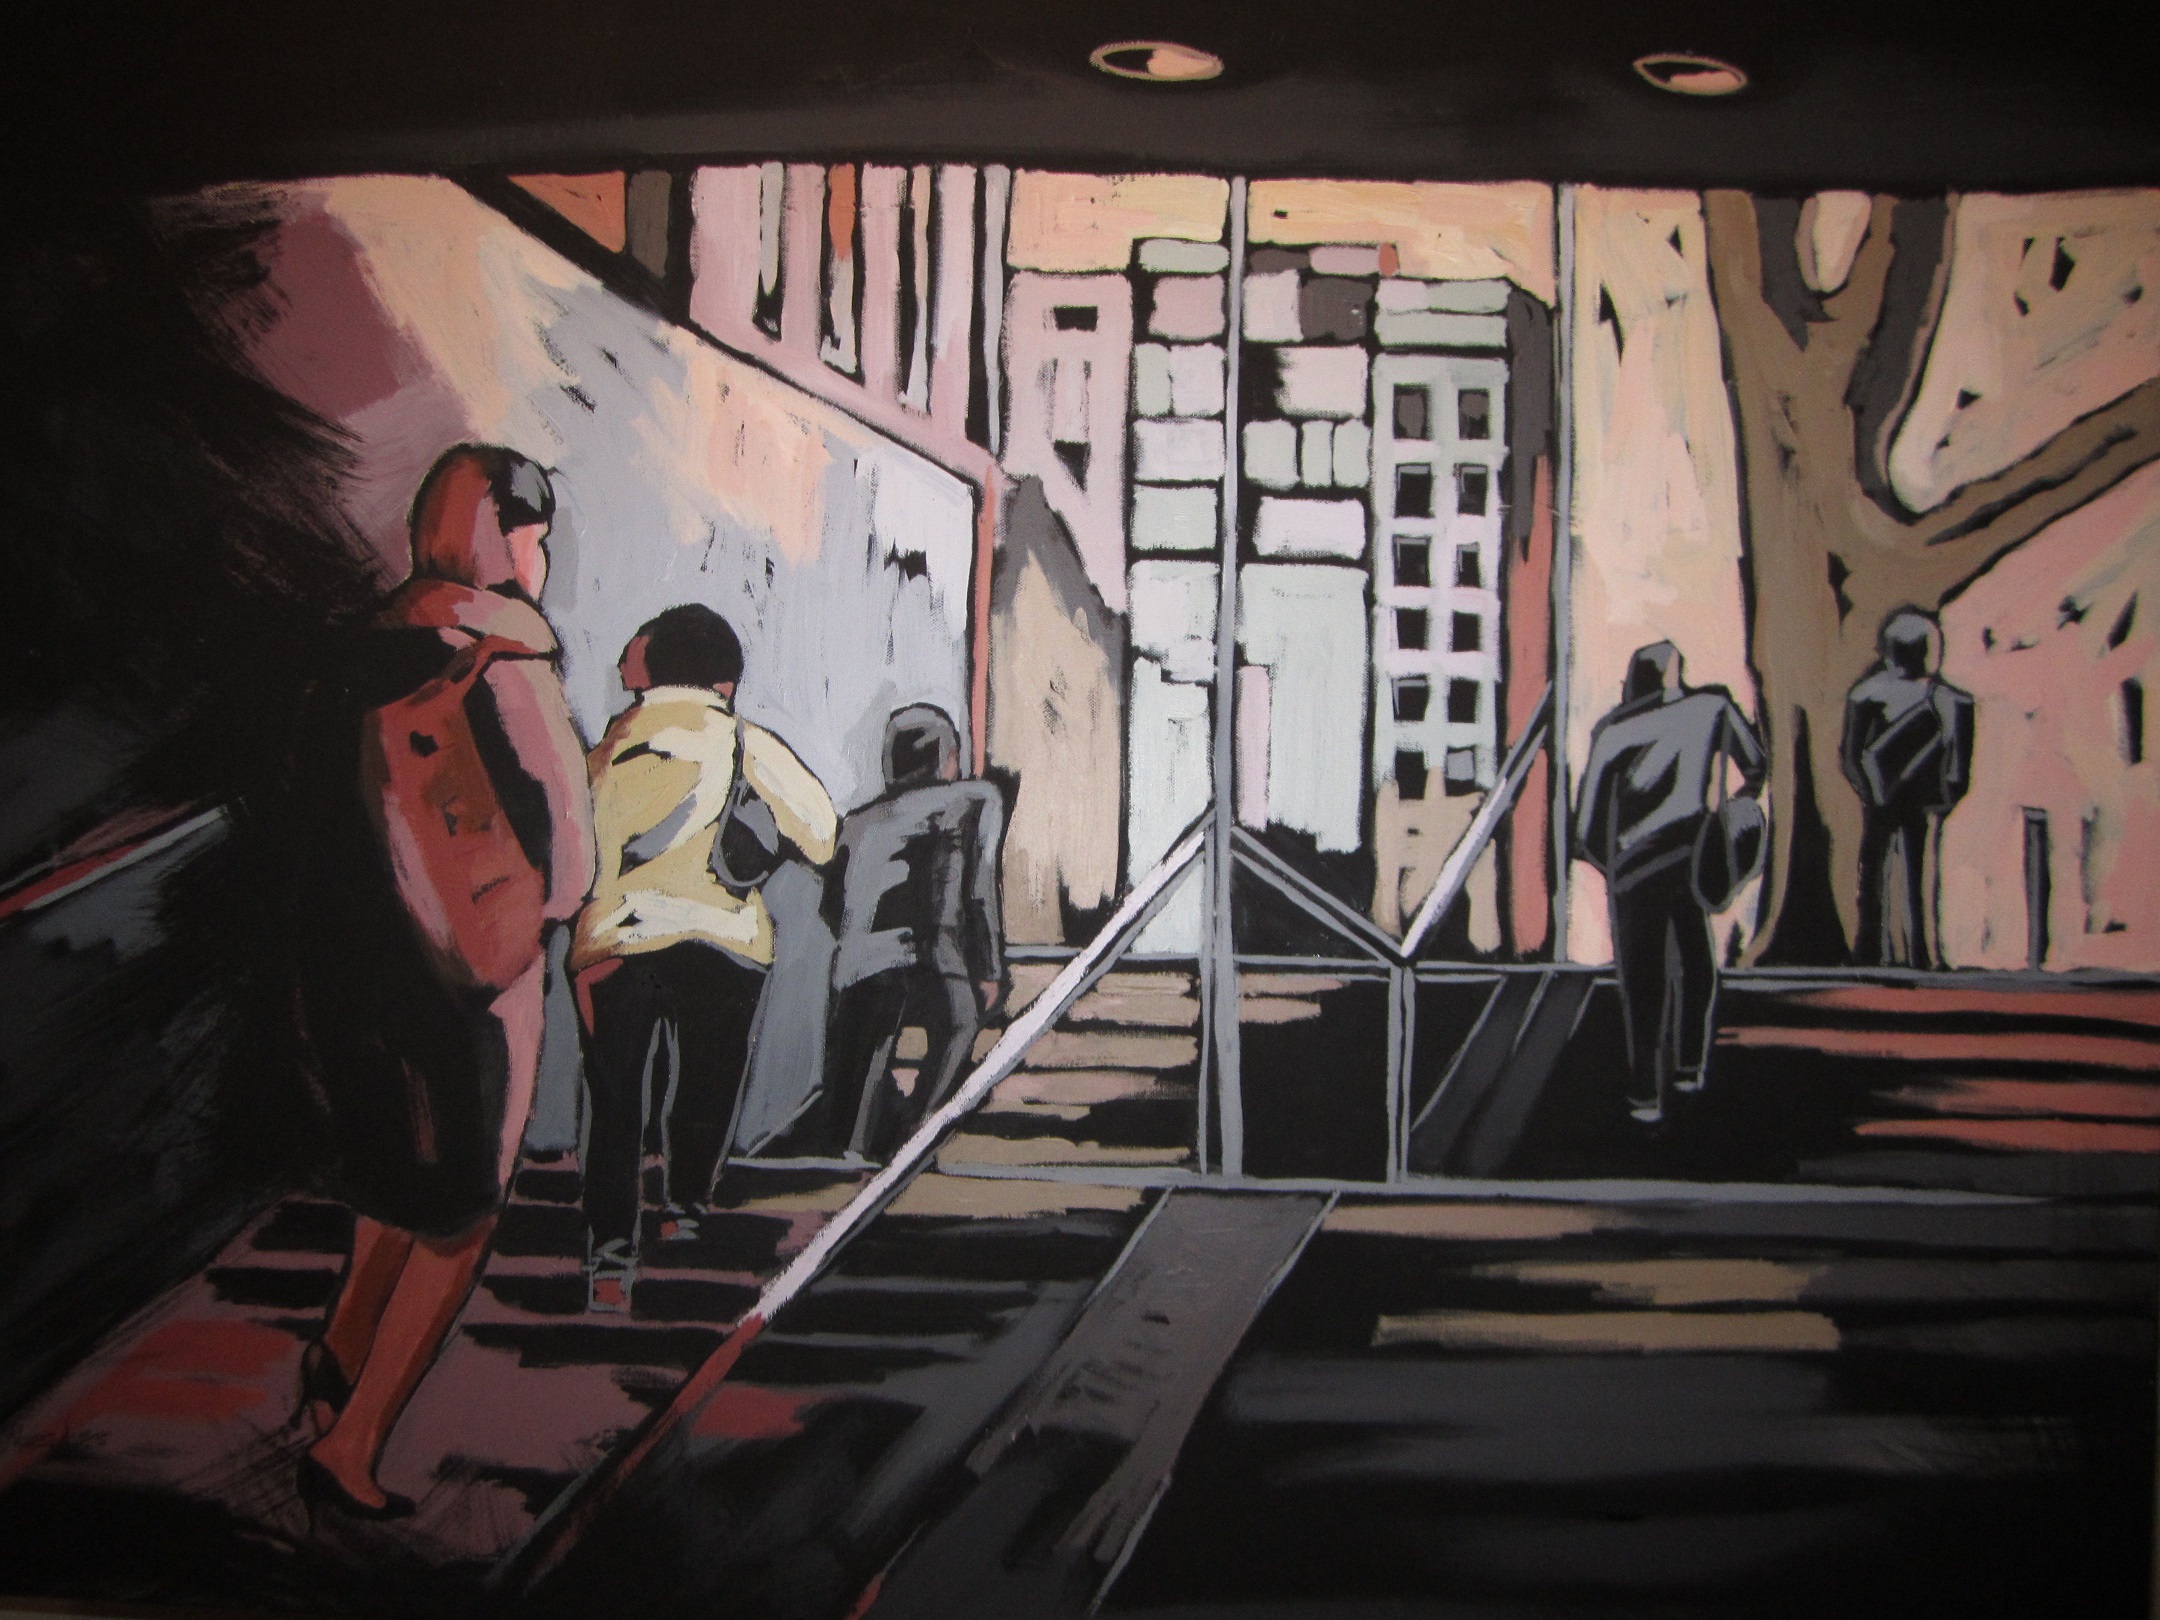 Subway Exit - Parliament Station by Marisa Avano | Lethbridge Landscape Prize 2021 Finalists | Lethbridge Gallery